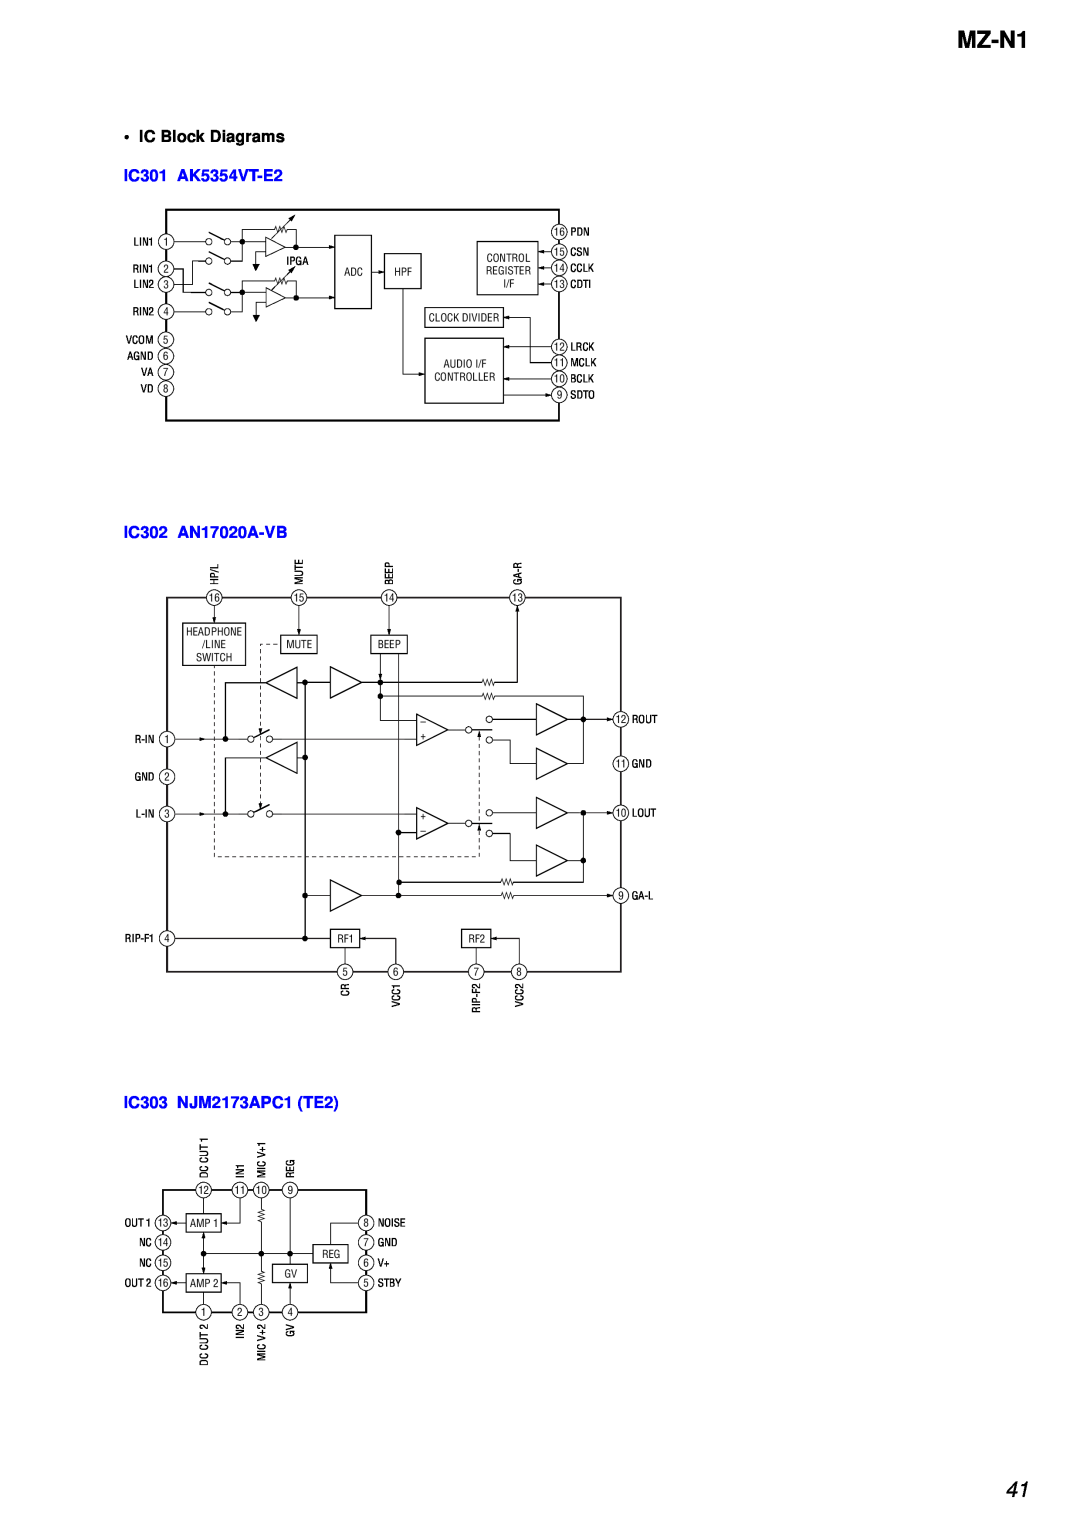 Sony MZ-N1 service manual IC Block Diagrams IC301 AK5354VT-E2, IC302 AN17020A-VB, IC303 NJM2173APC1 TE2 